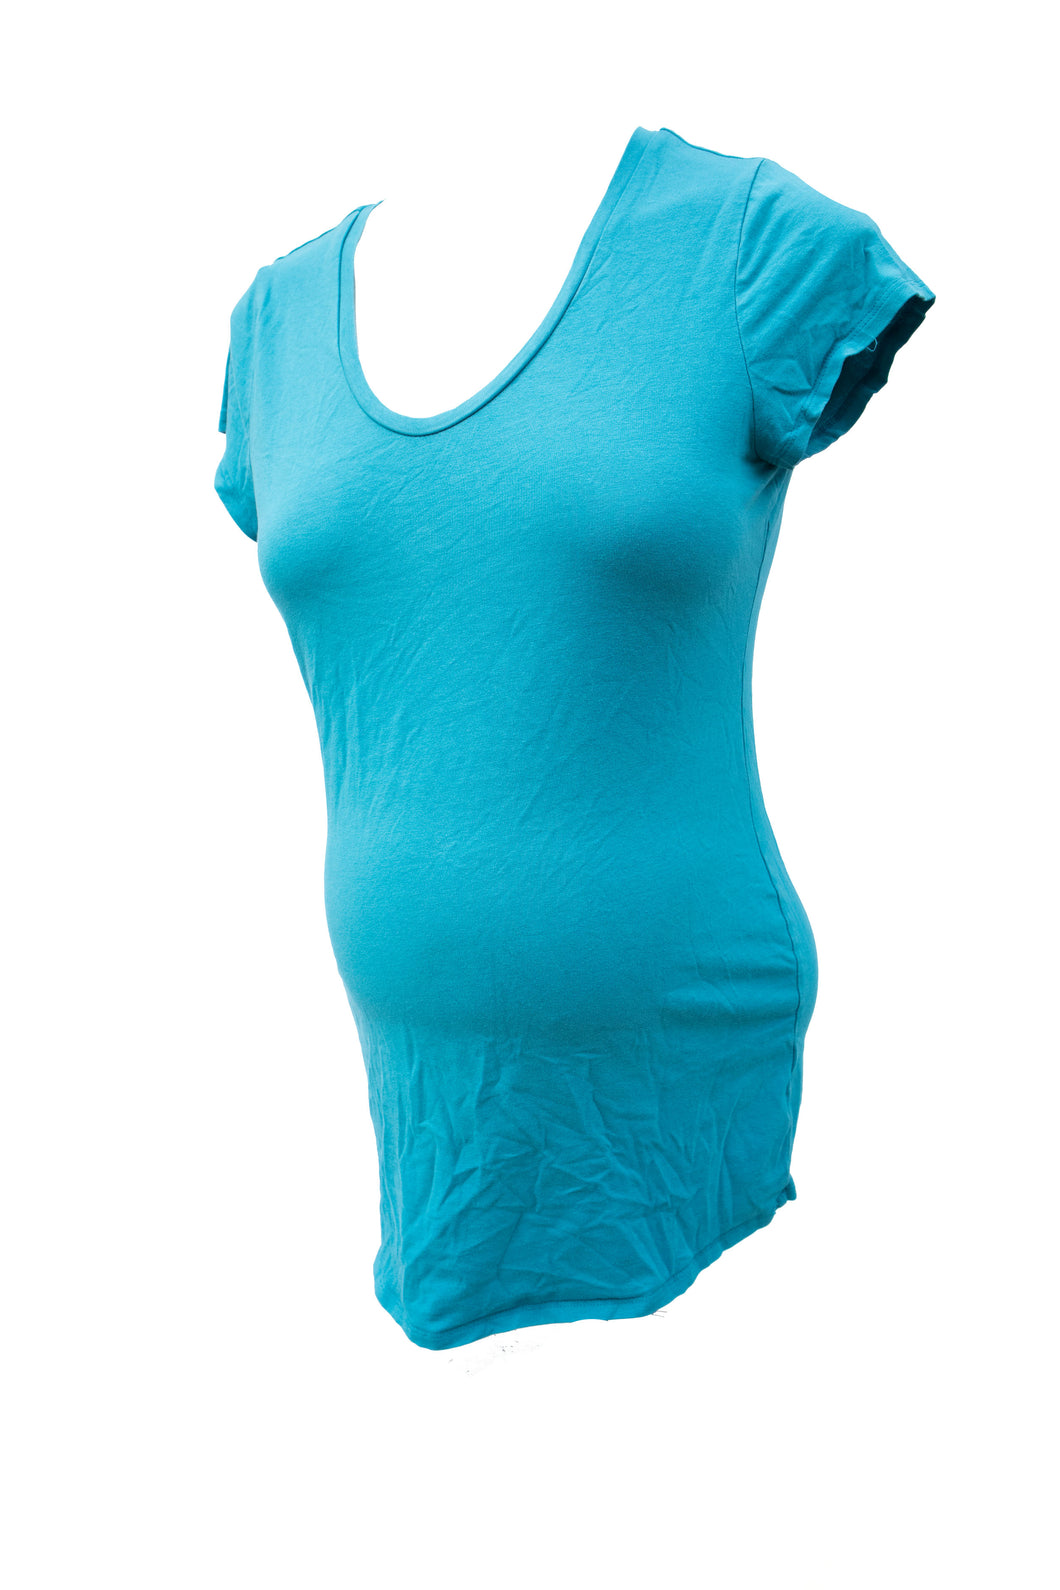 L Thyme Maternity T-shirt in Light Blue